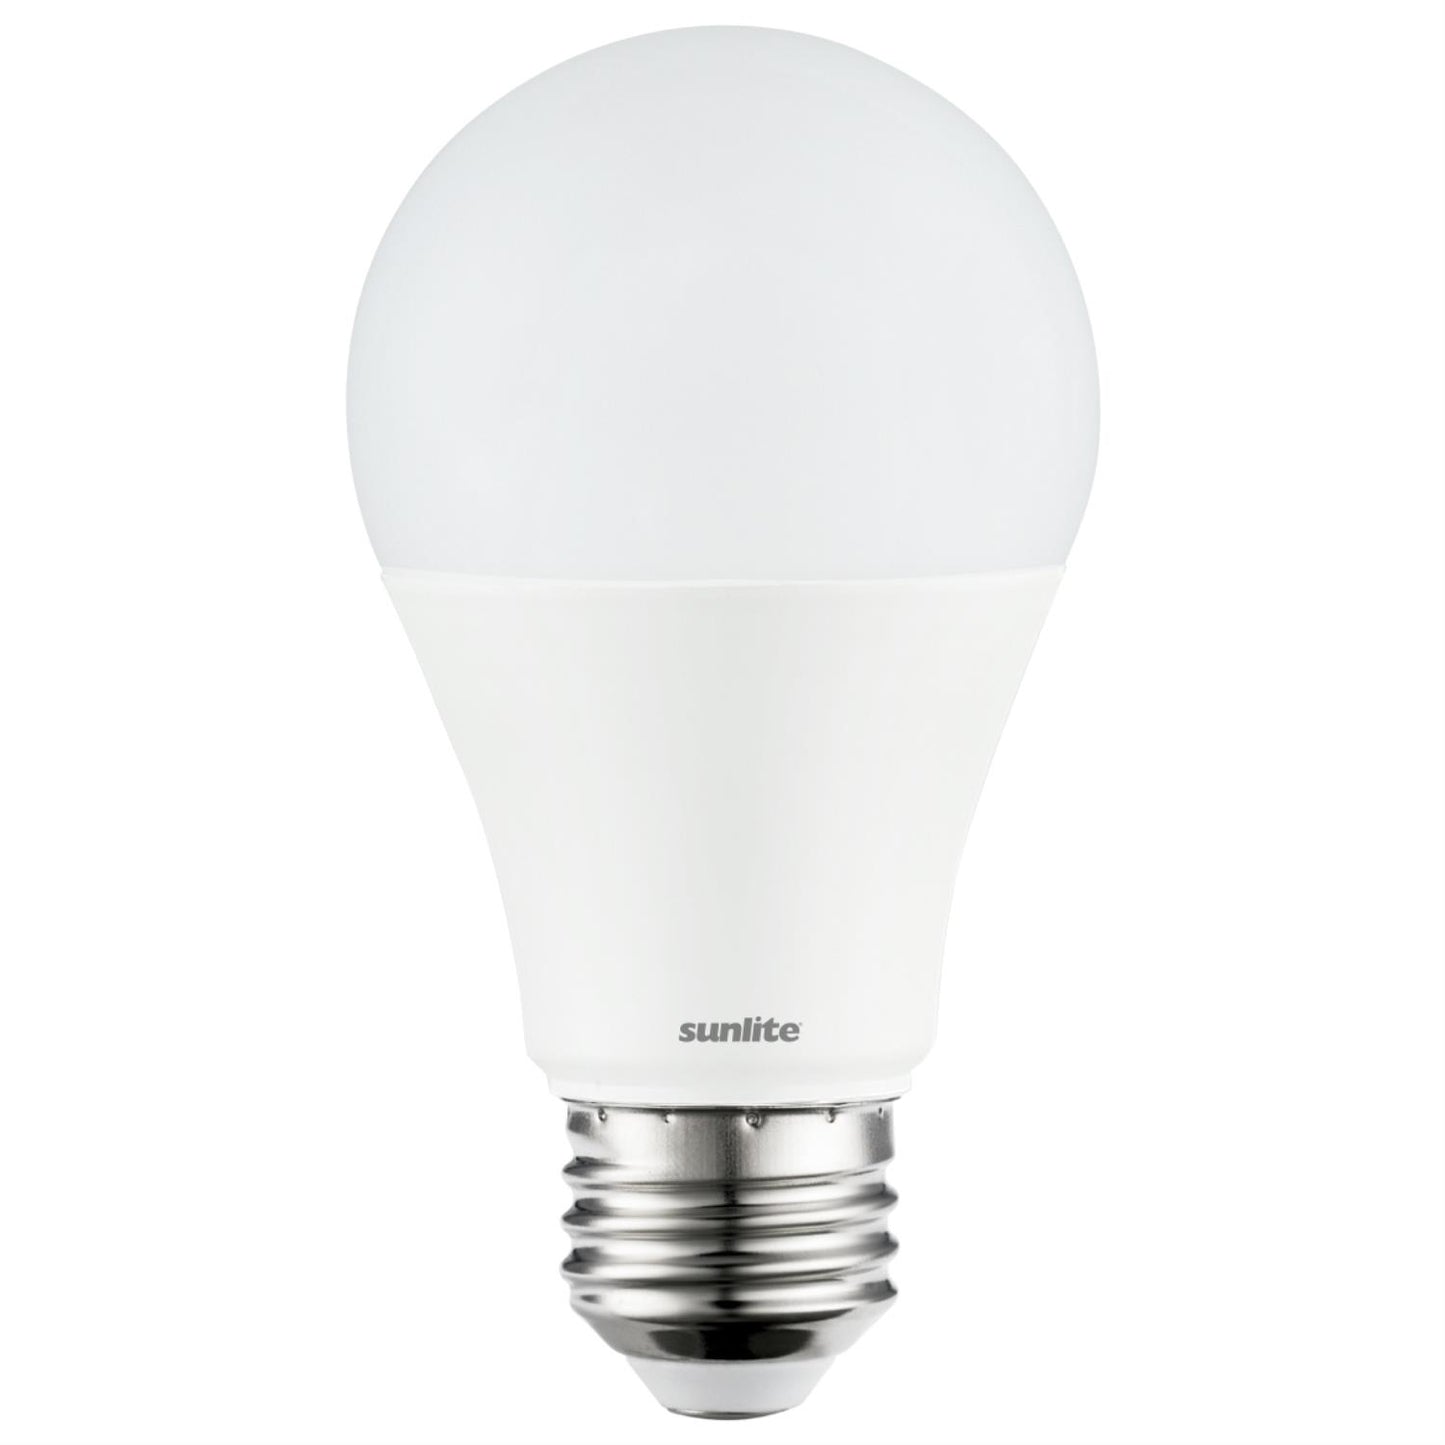 12 Pack Sunlite LED A19 Bulbs, 9 Watt (60 Watt Equivalent), 3000K Warm White, Non-dimmable